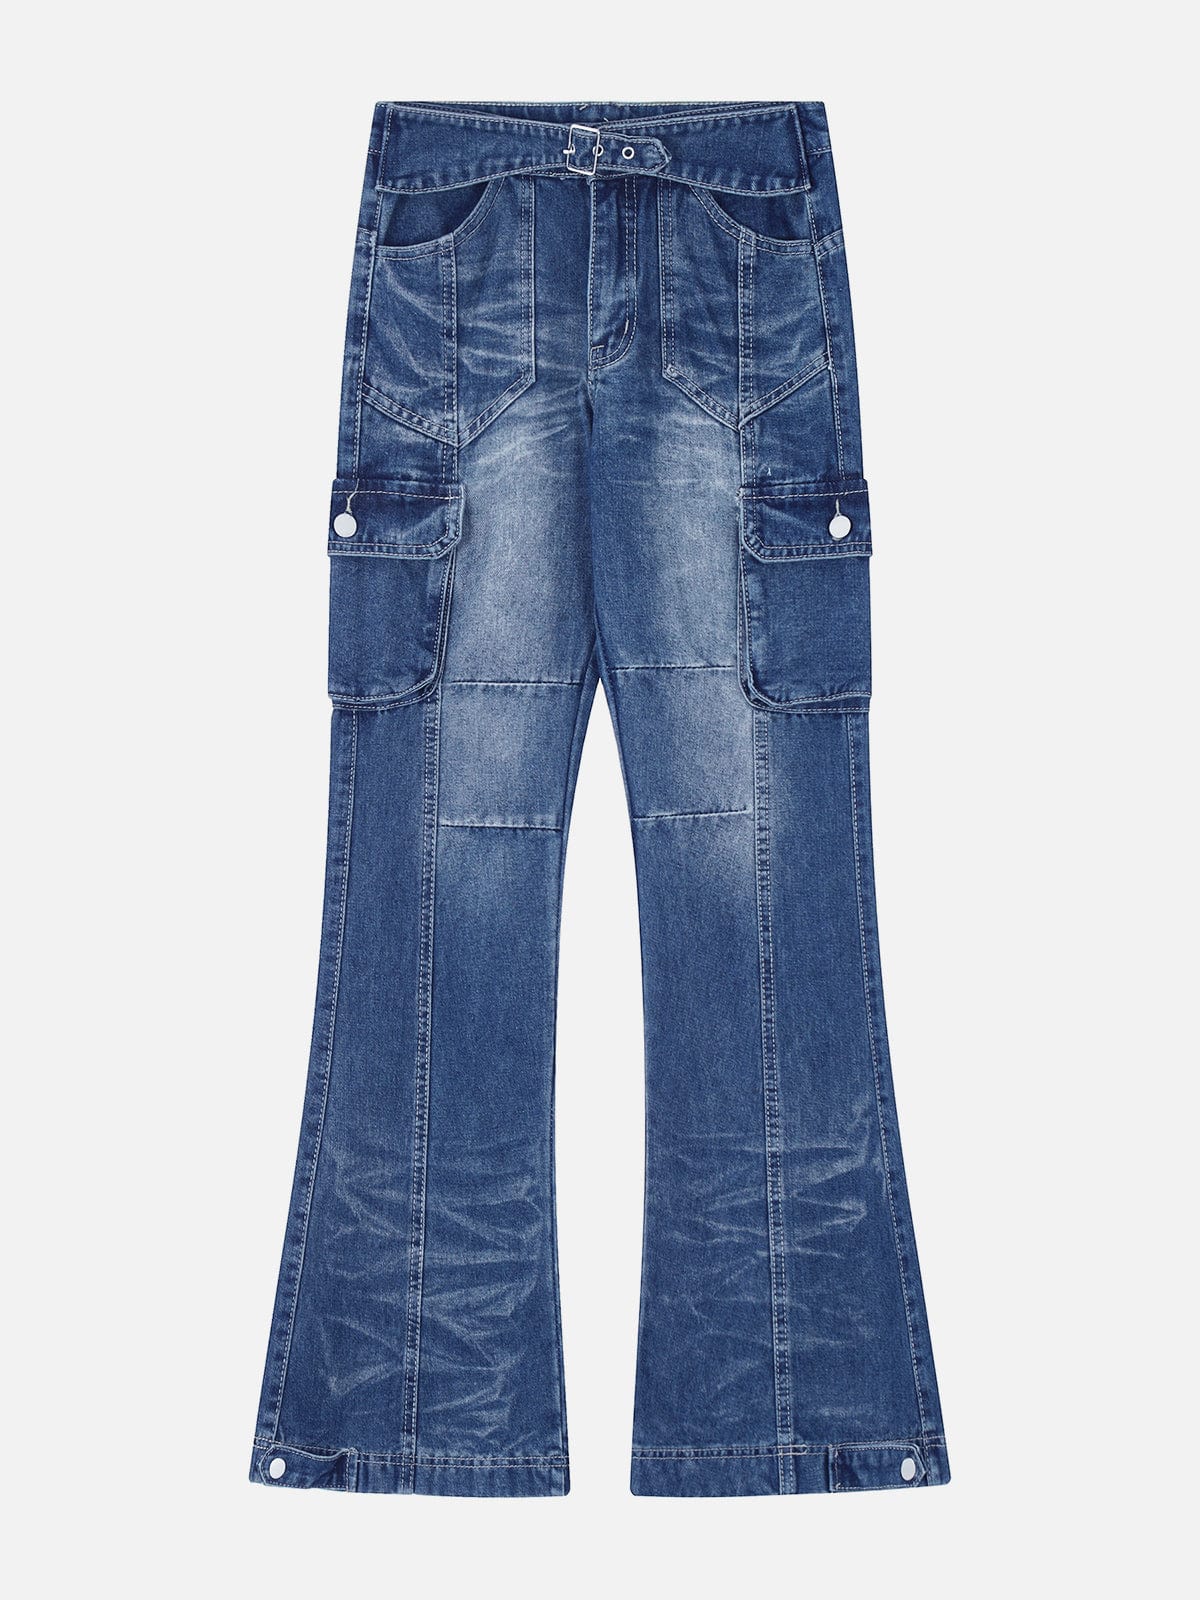 NEV Multi Pocket Wrinkle Jeans